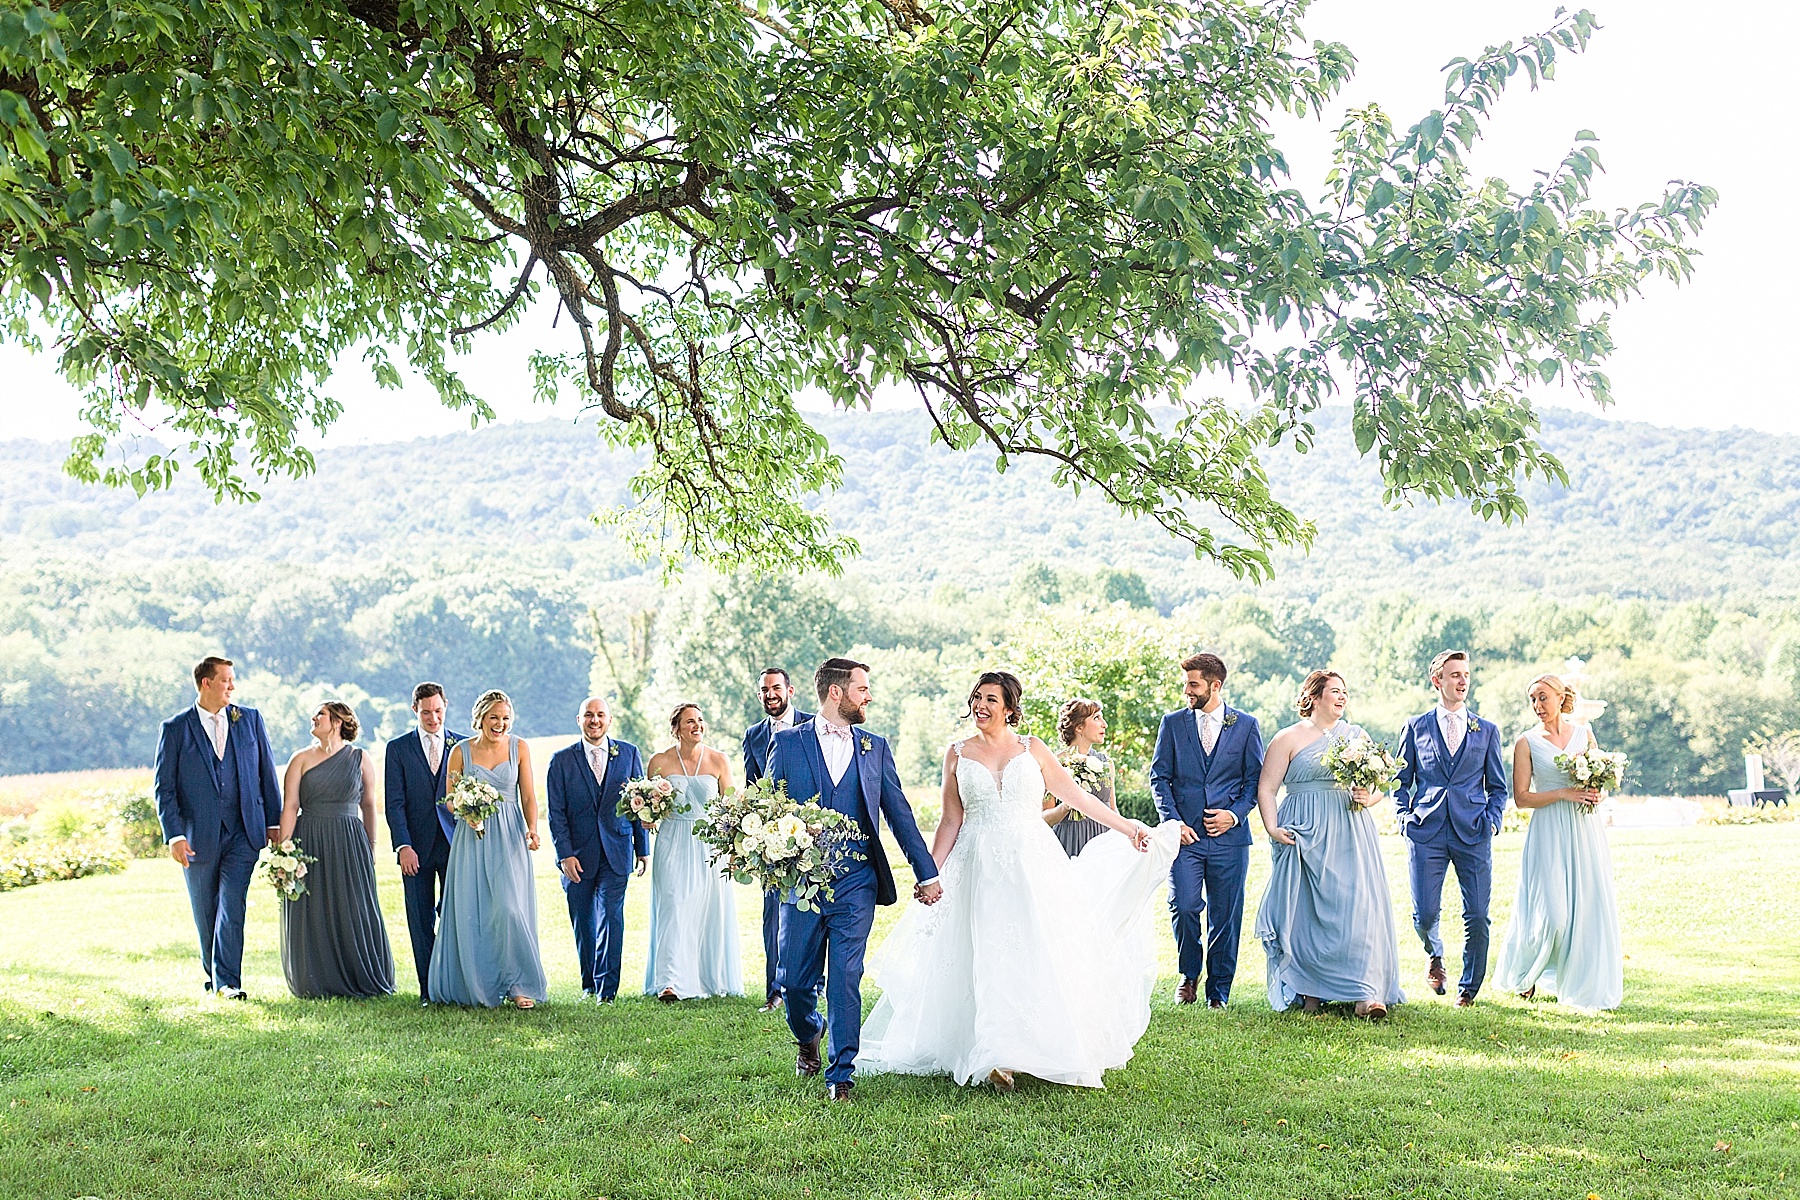 Alexandra Mandato Photography photographs navy blue and dusty blue wedding party attire